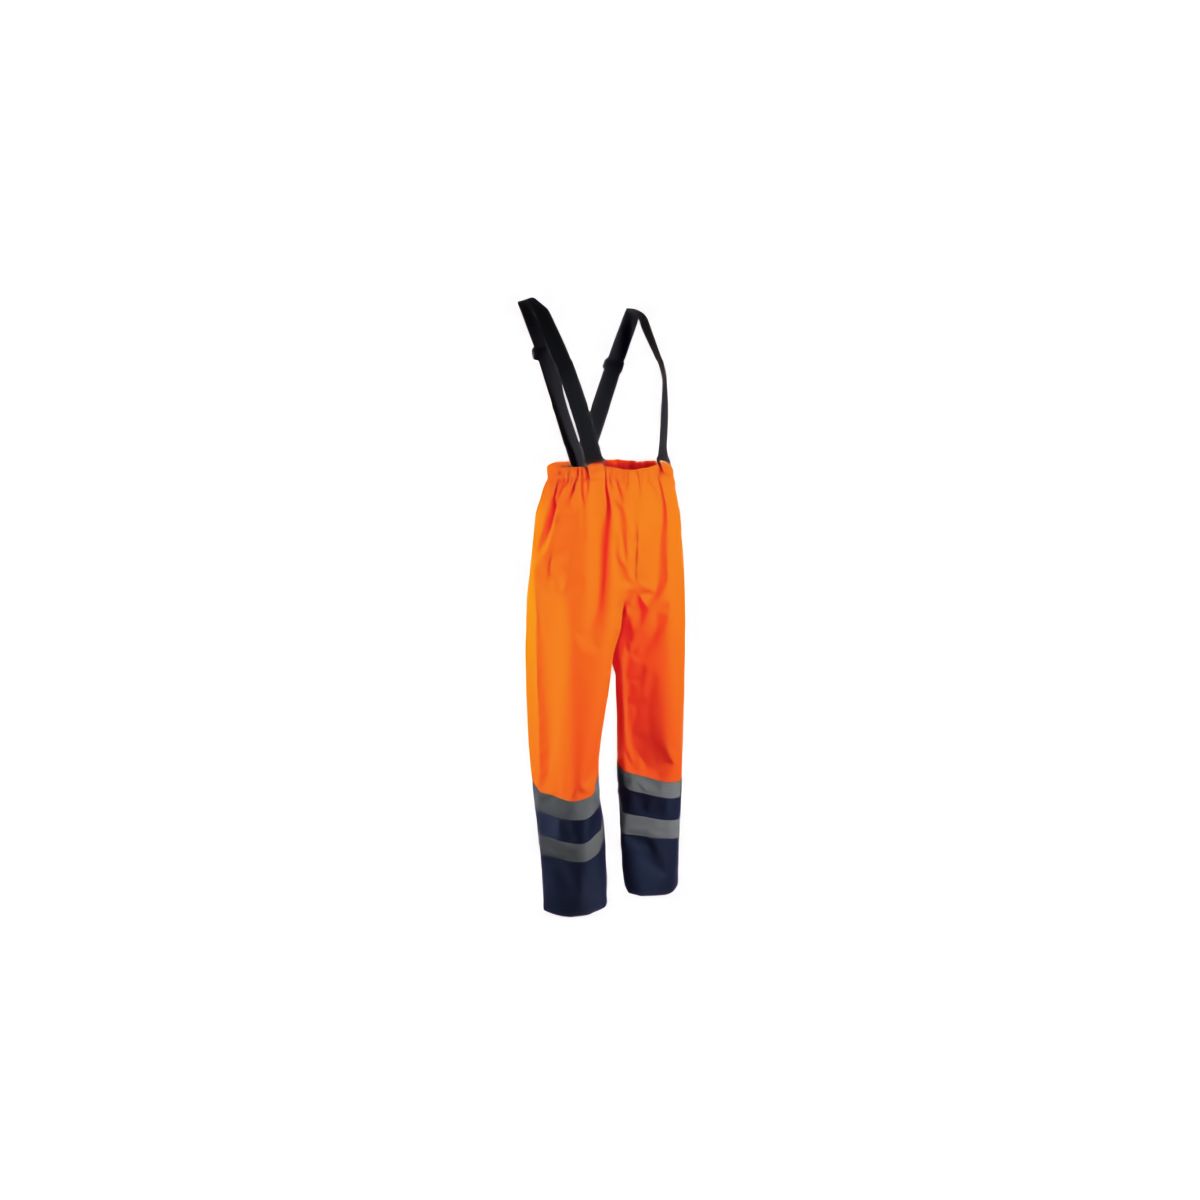 Pantalon Hydra orange et marine - Coverguard - Taille 3XL 0